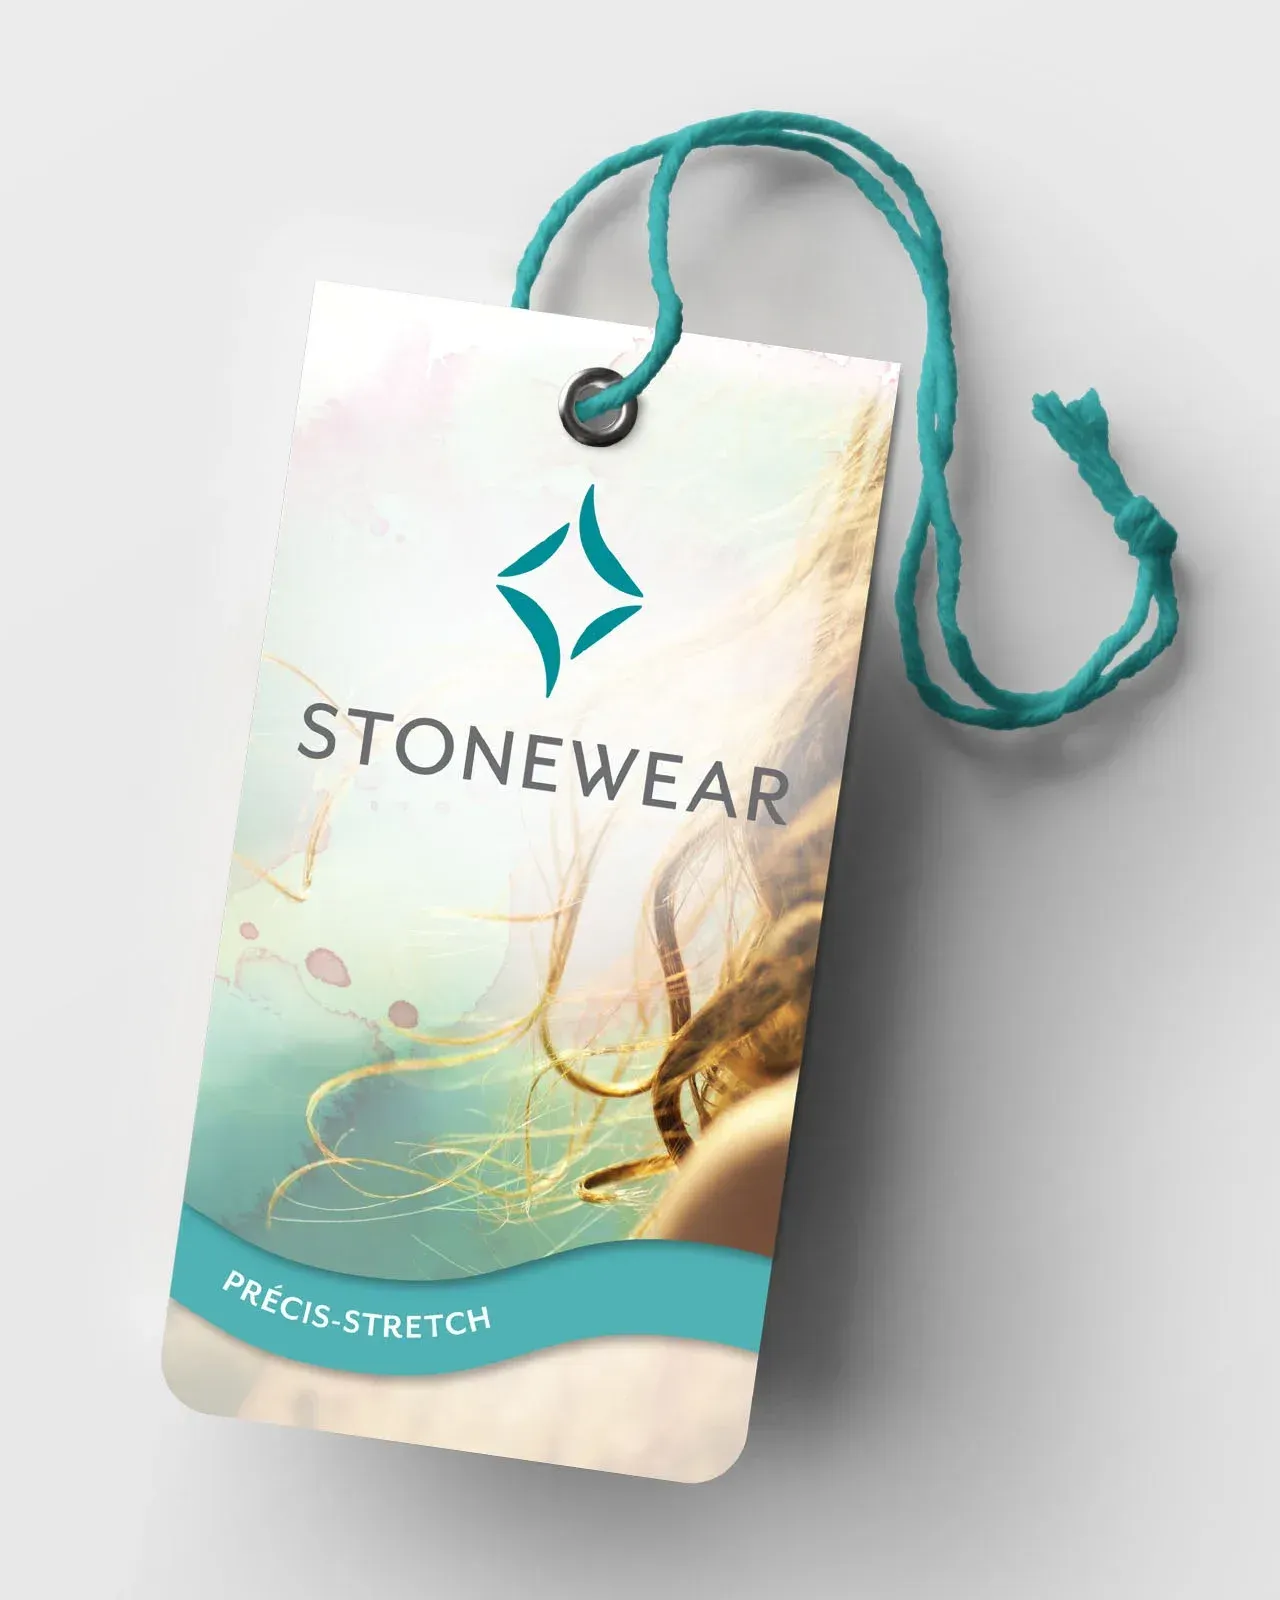 Stonewear Hangtag by Anthem Branding